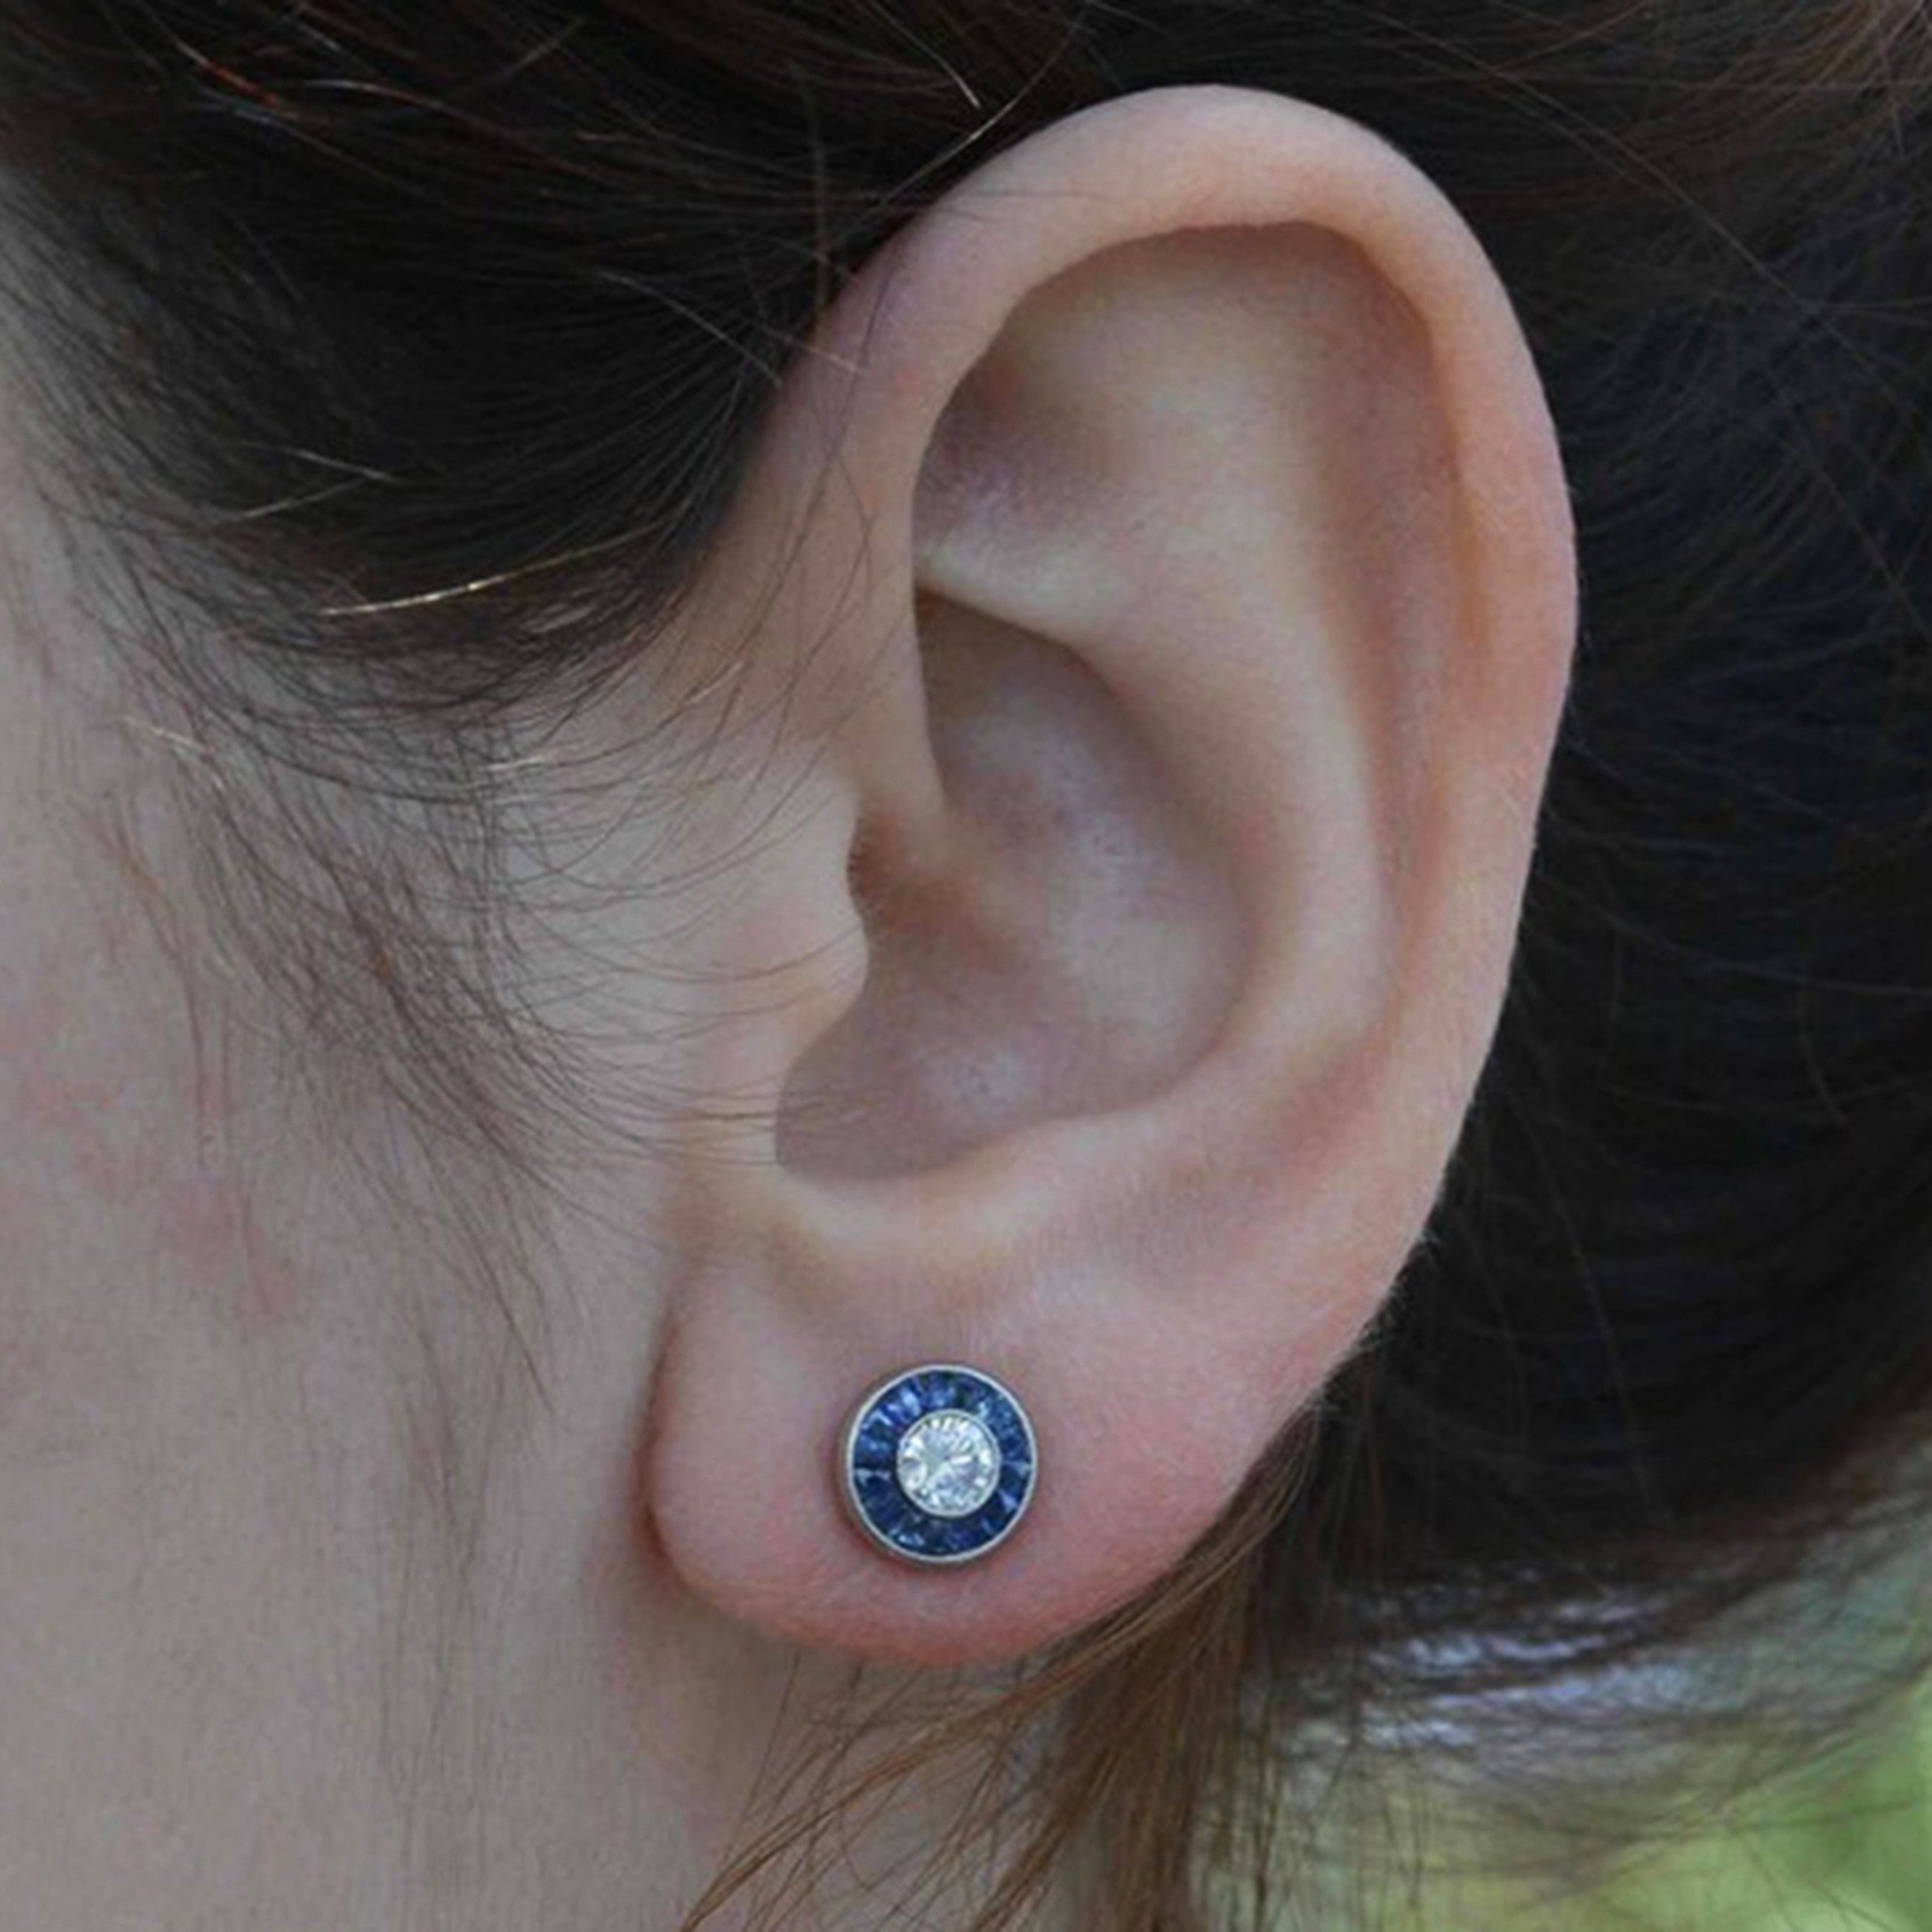 Art Deco Inspired Sapphire Diamond Stud Earrings